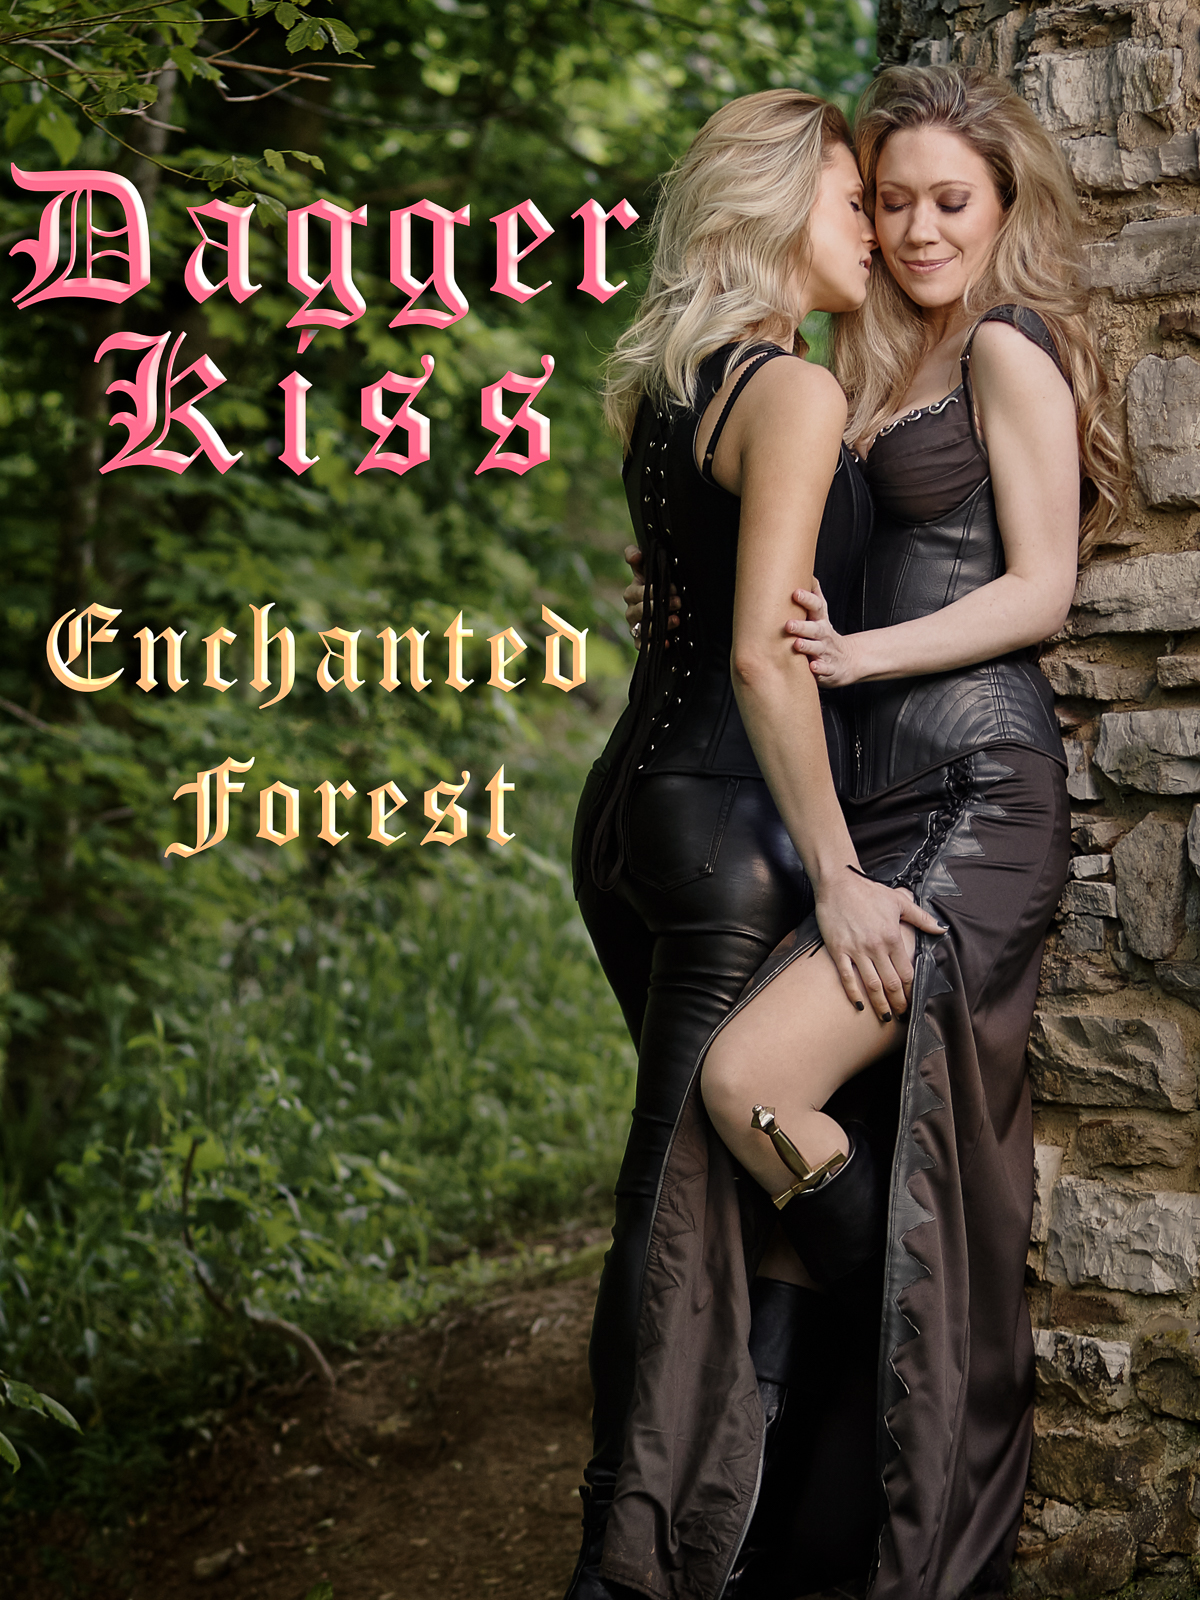 Dagger Kiss: Enchanted Forest (2020)